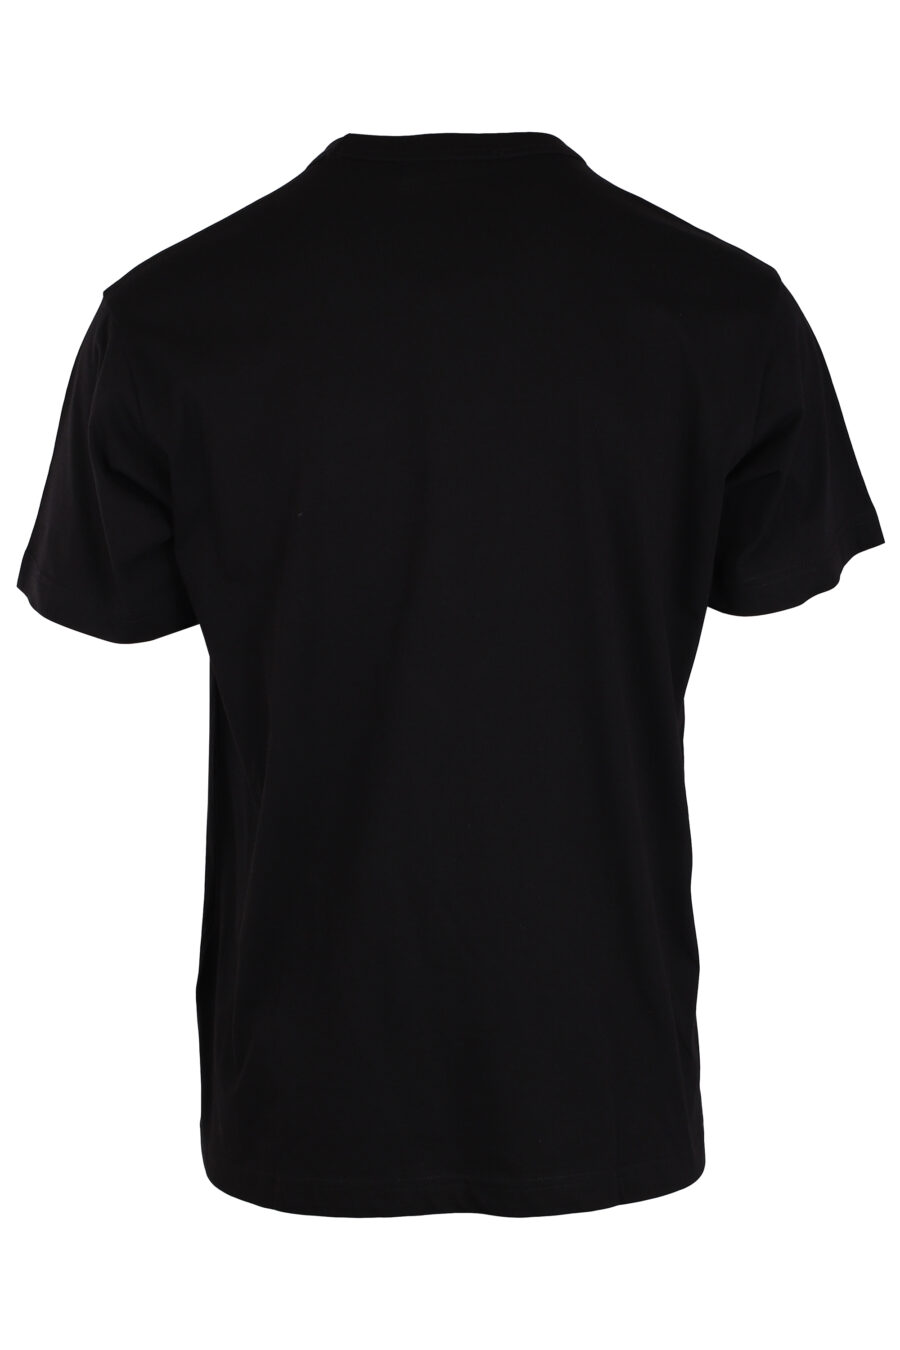 Camiseta negra con logo grande naranja - IMG 4020